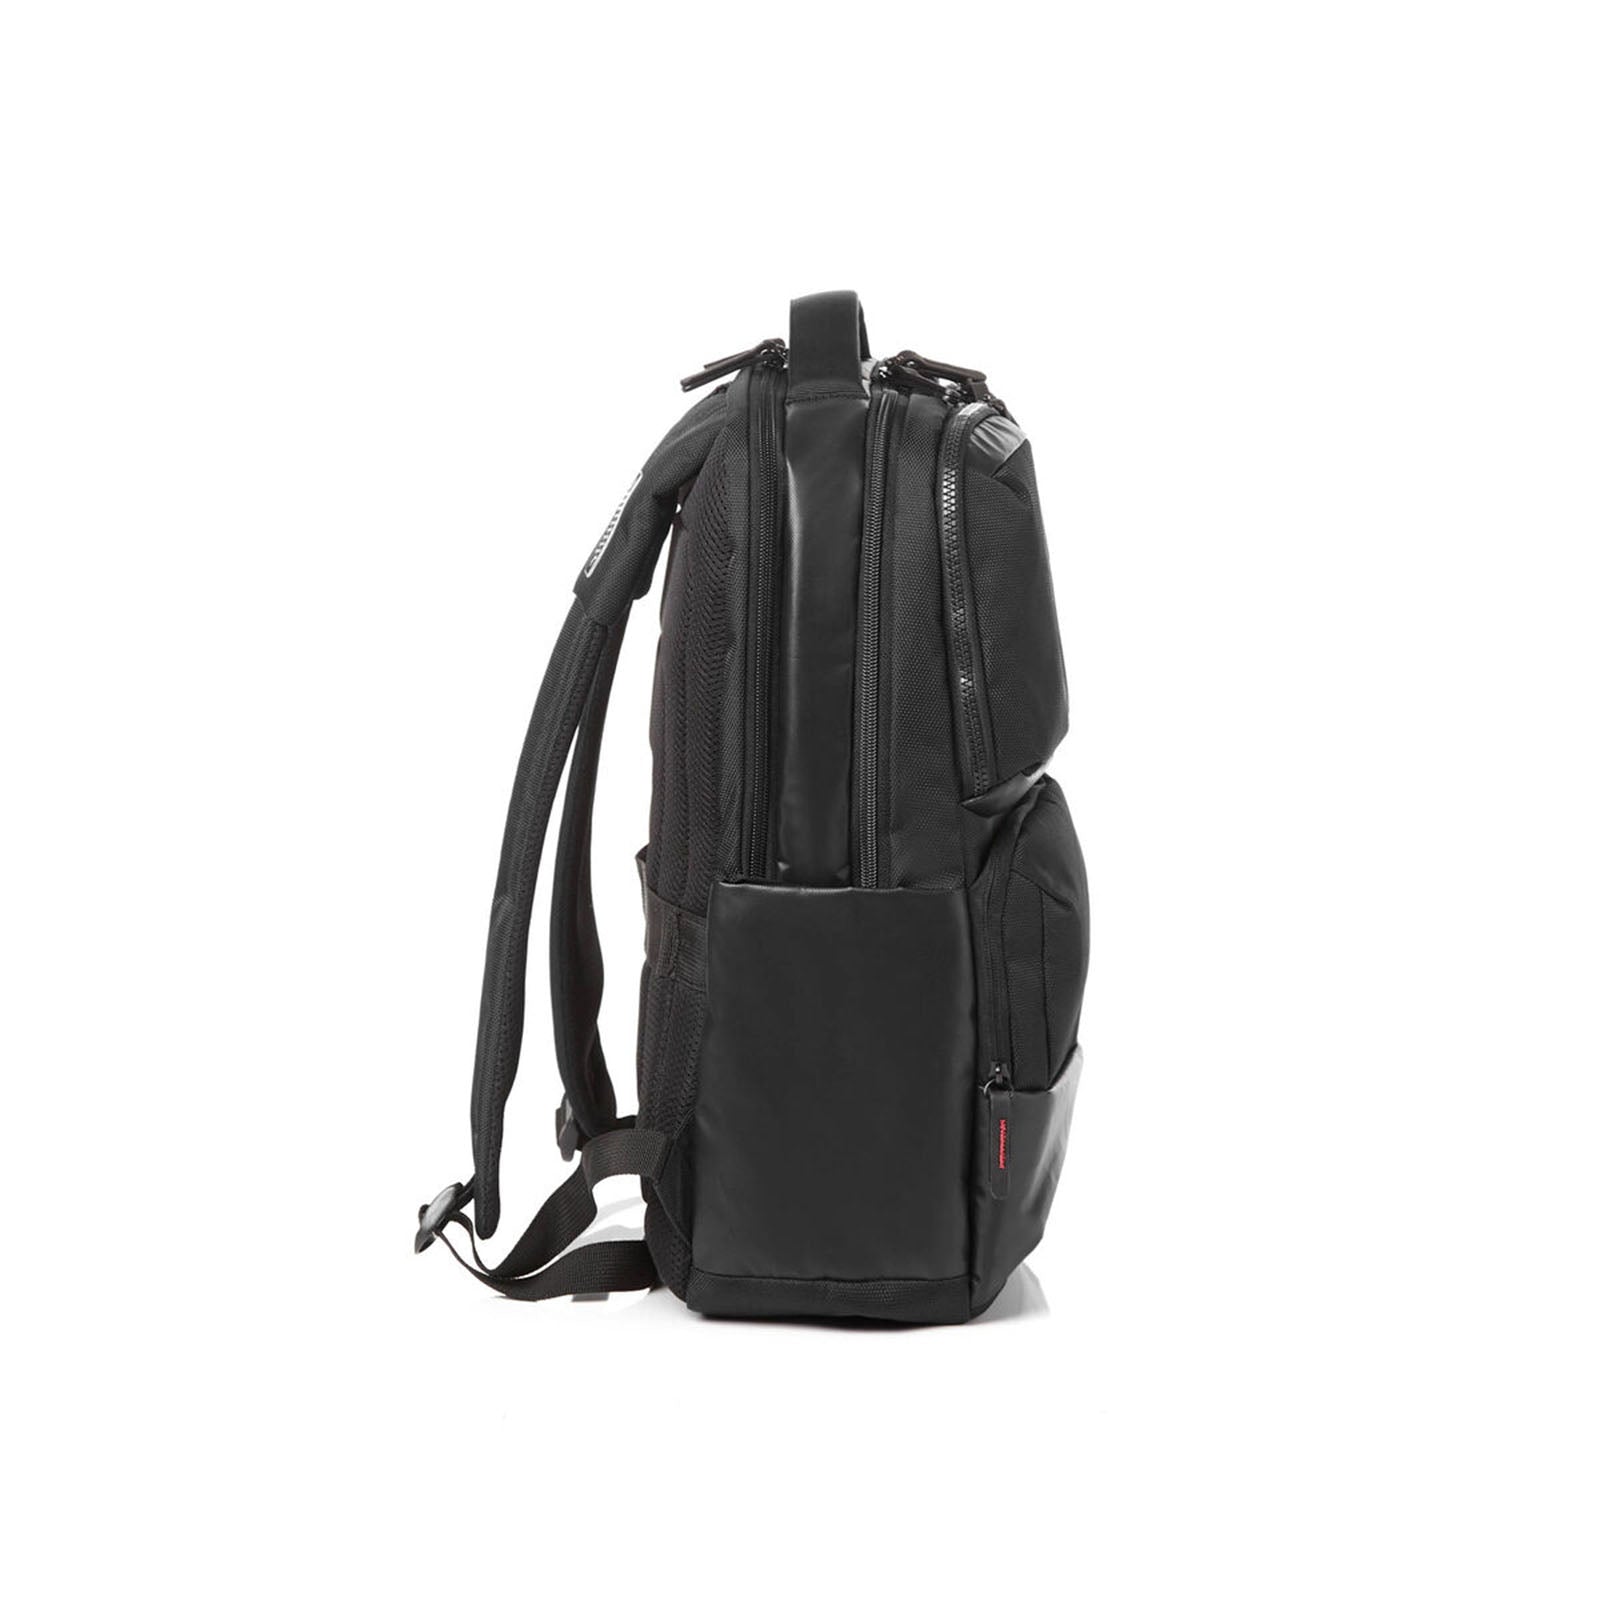 American-Tourister-Zork-15-Inch-Laptop-Backpack-Black-Side